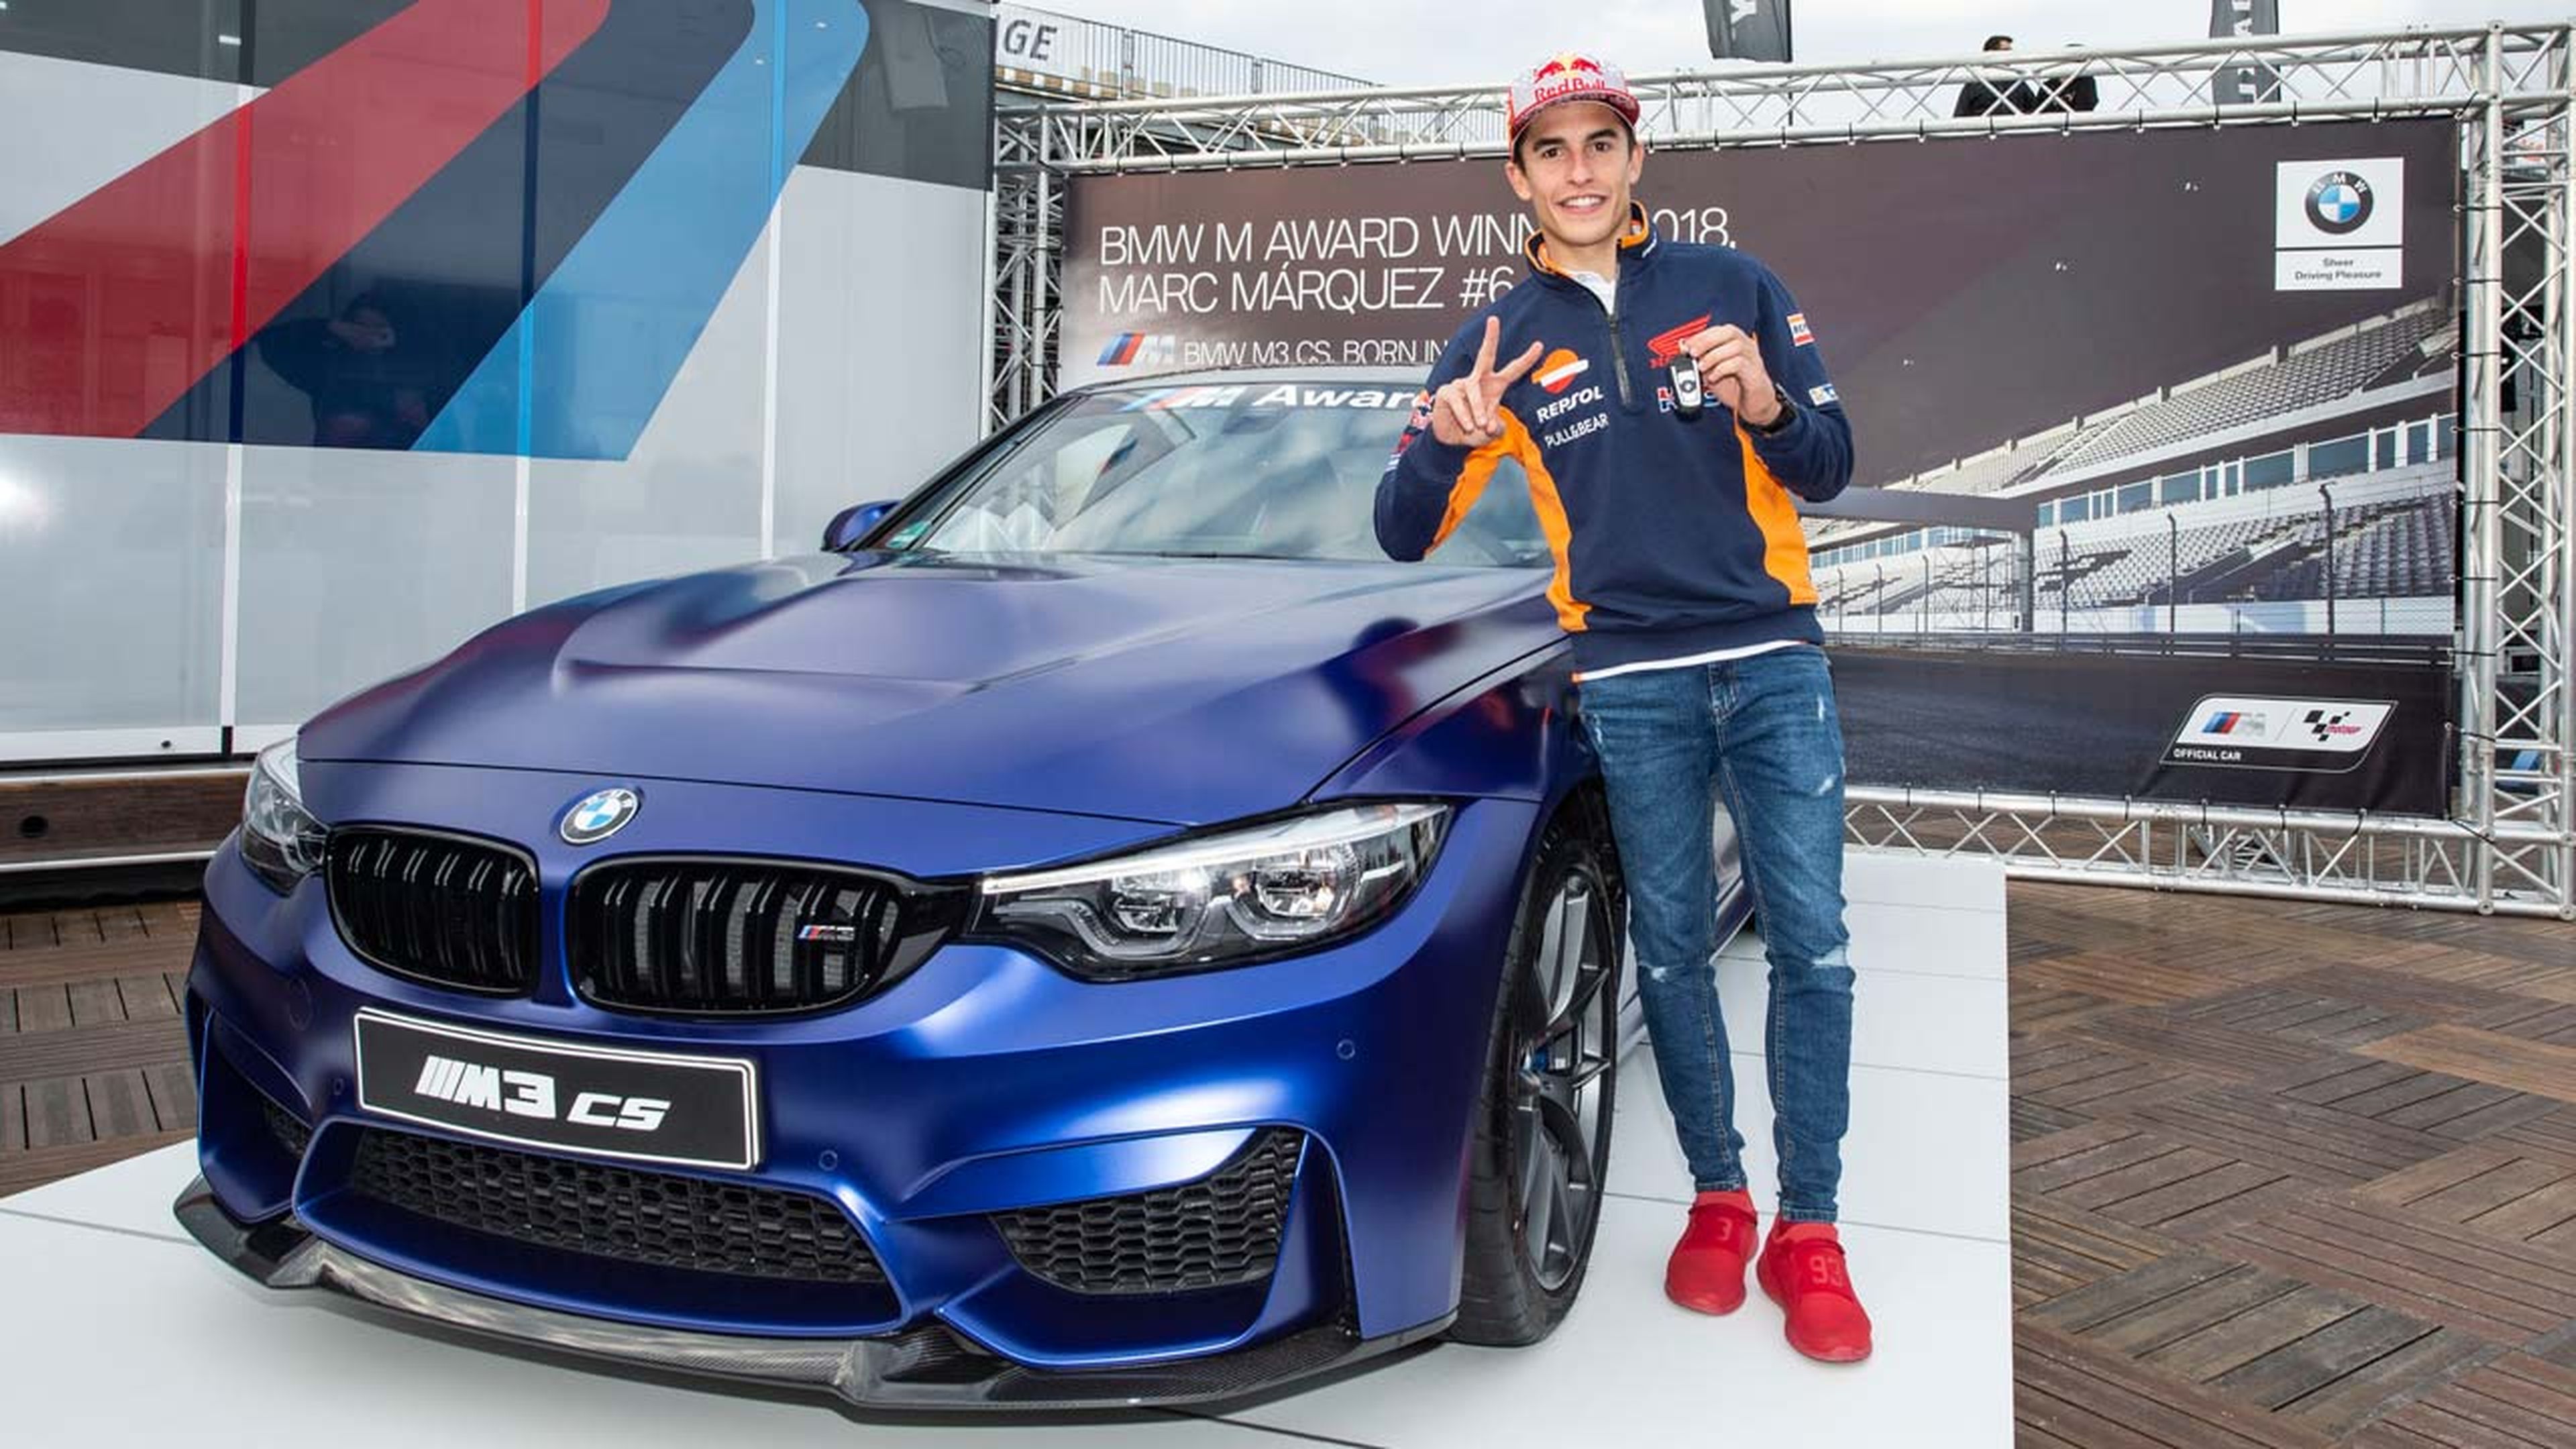 Marc Márquez con el BMW M3 CS que ganó